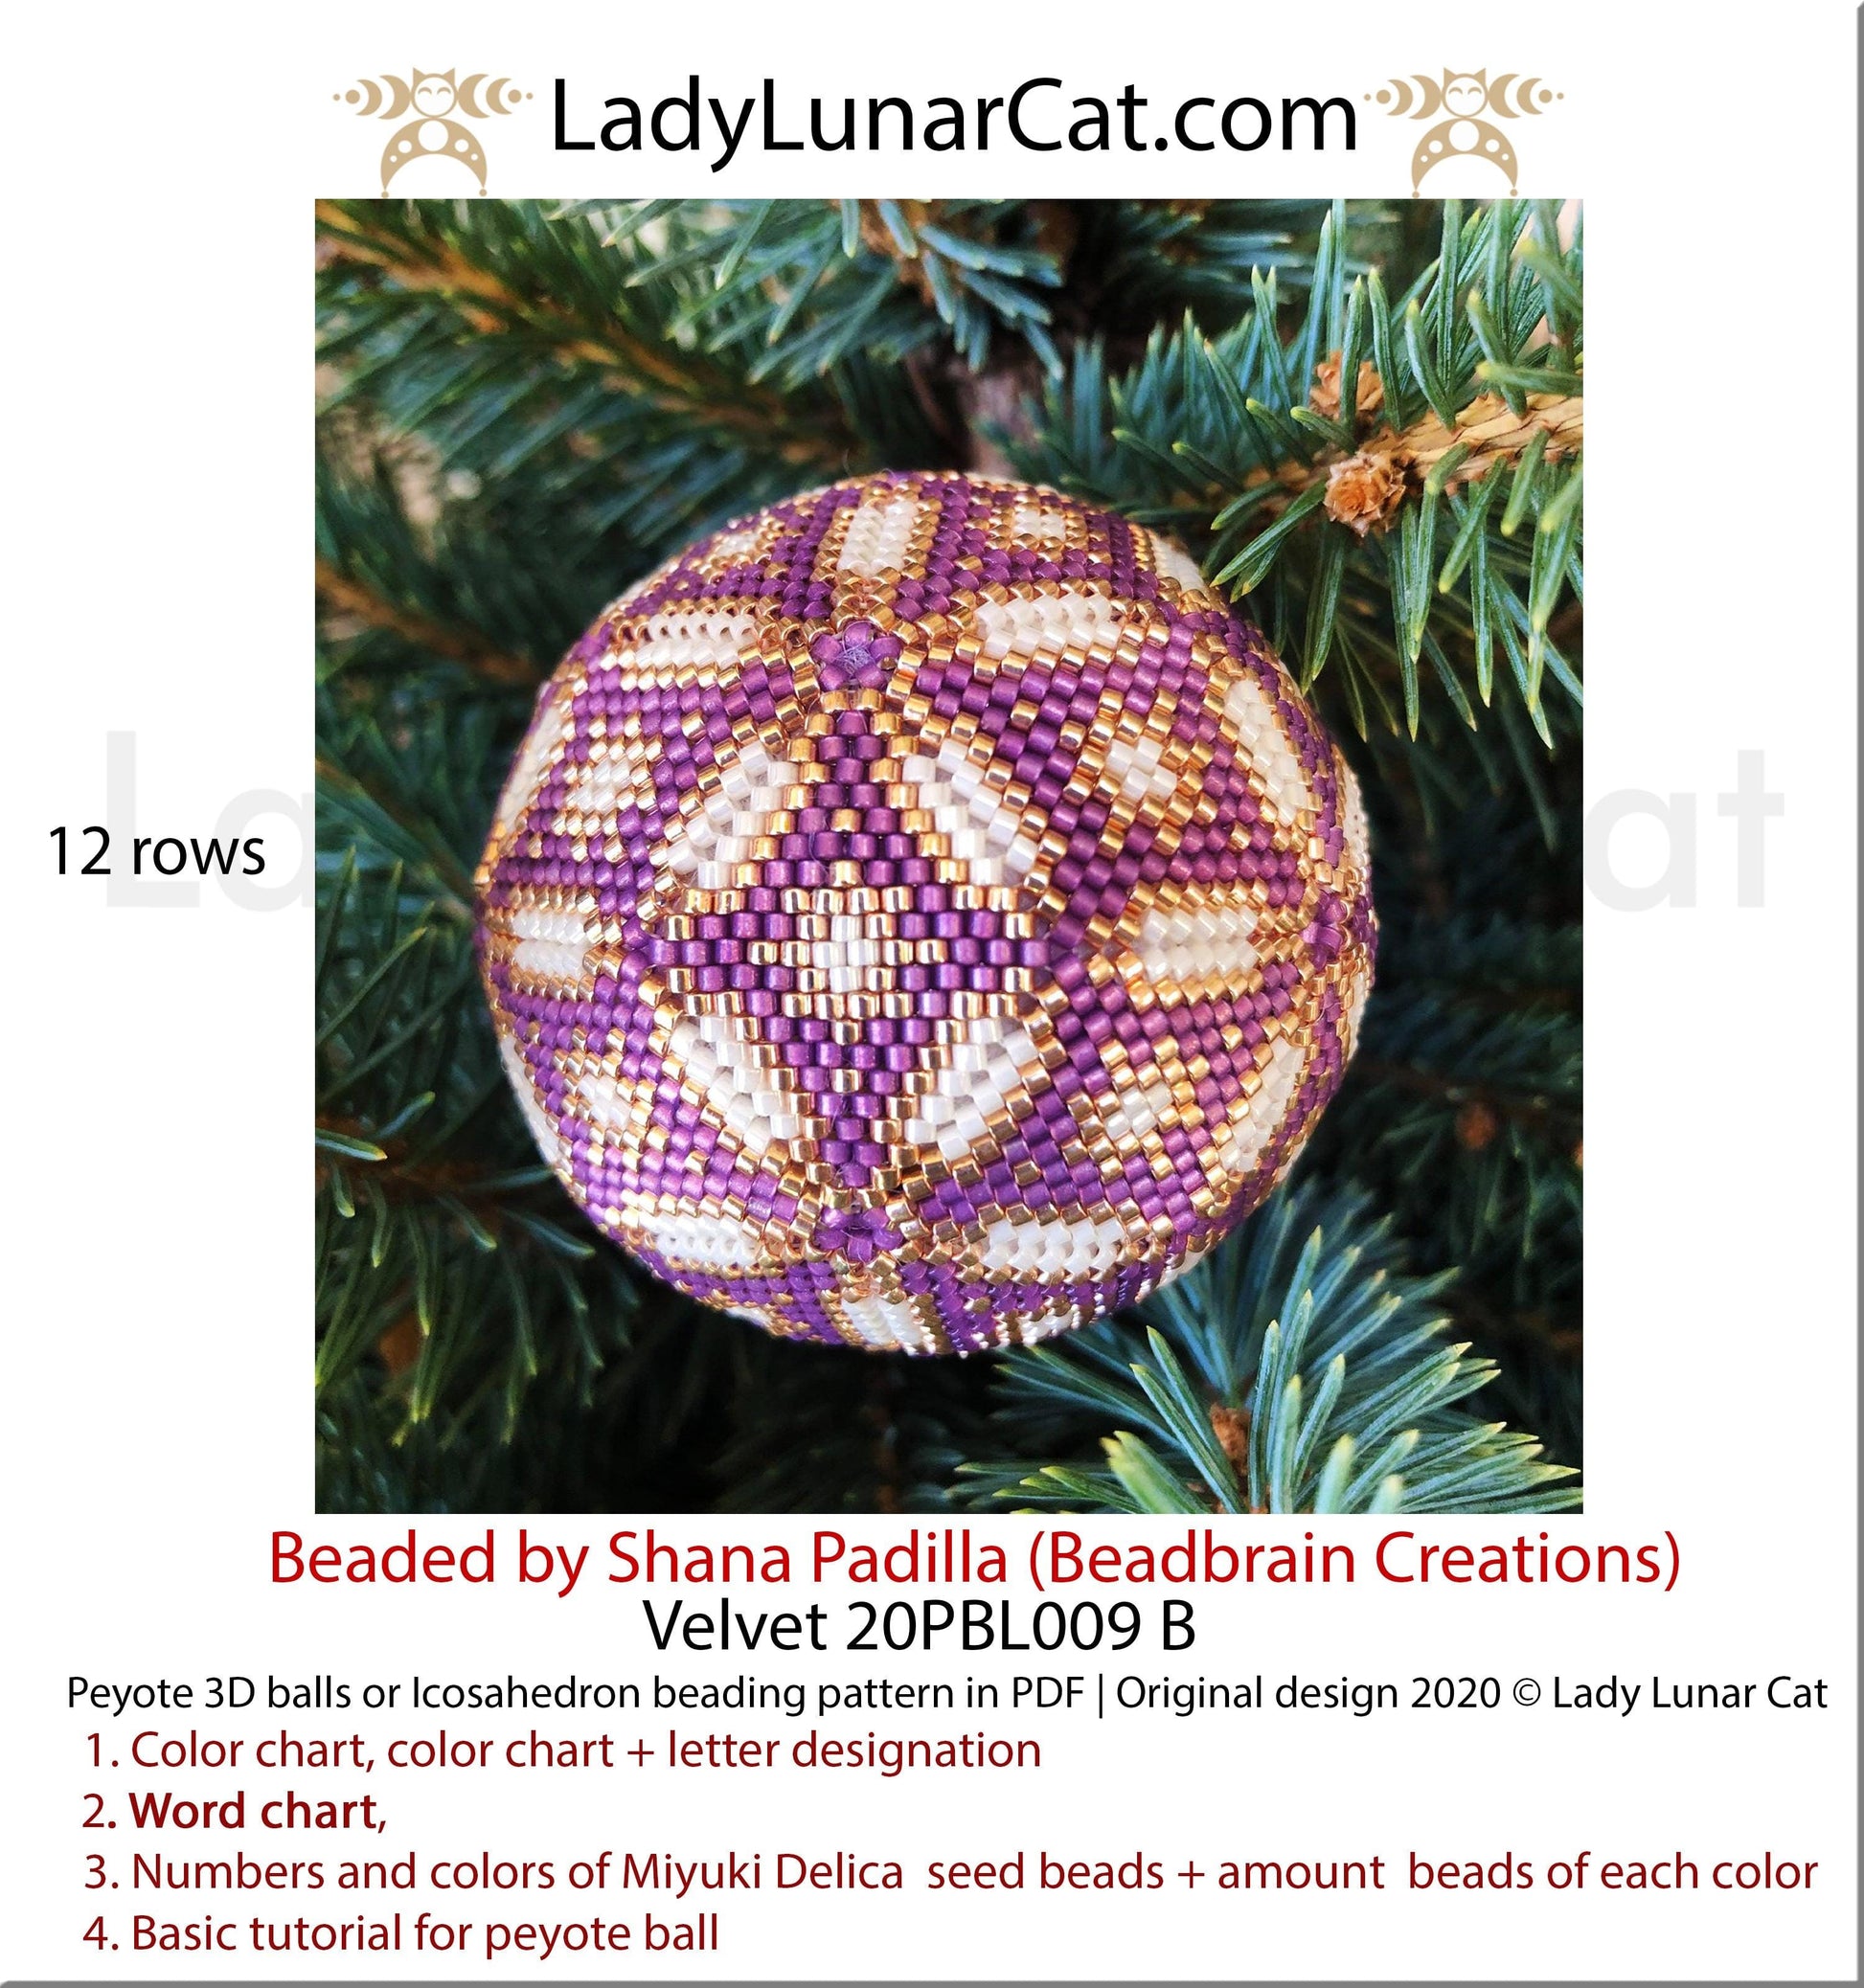 Peyote 3d ball pattern for beading | Beaded Icosahedron Velvet 20PBL009  12 rows LadyLunarCat